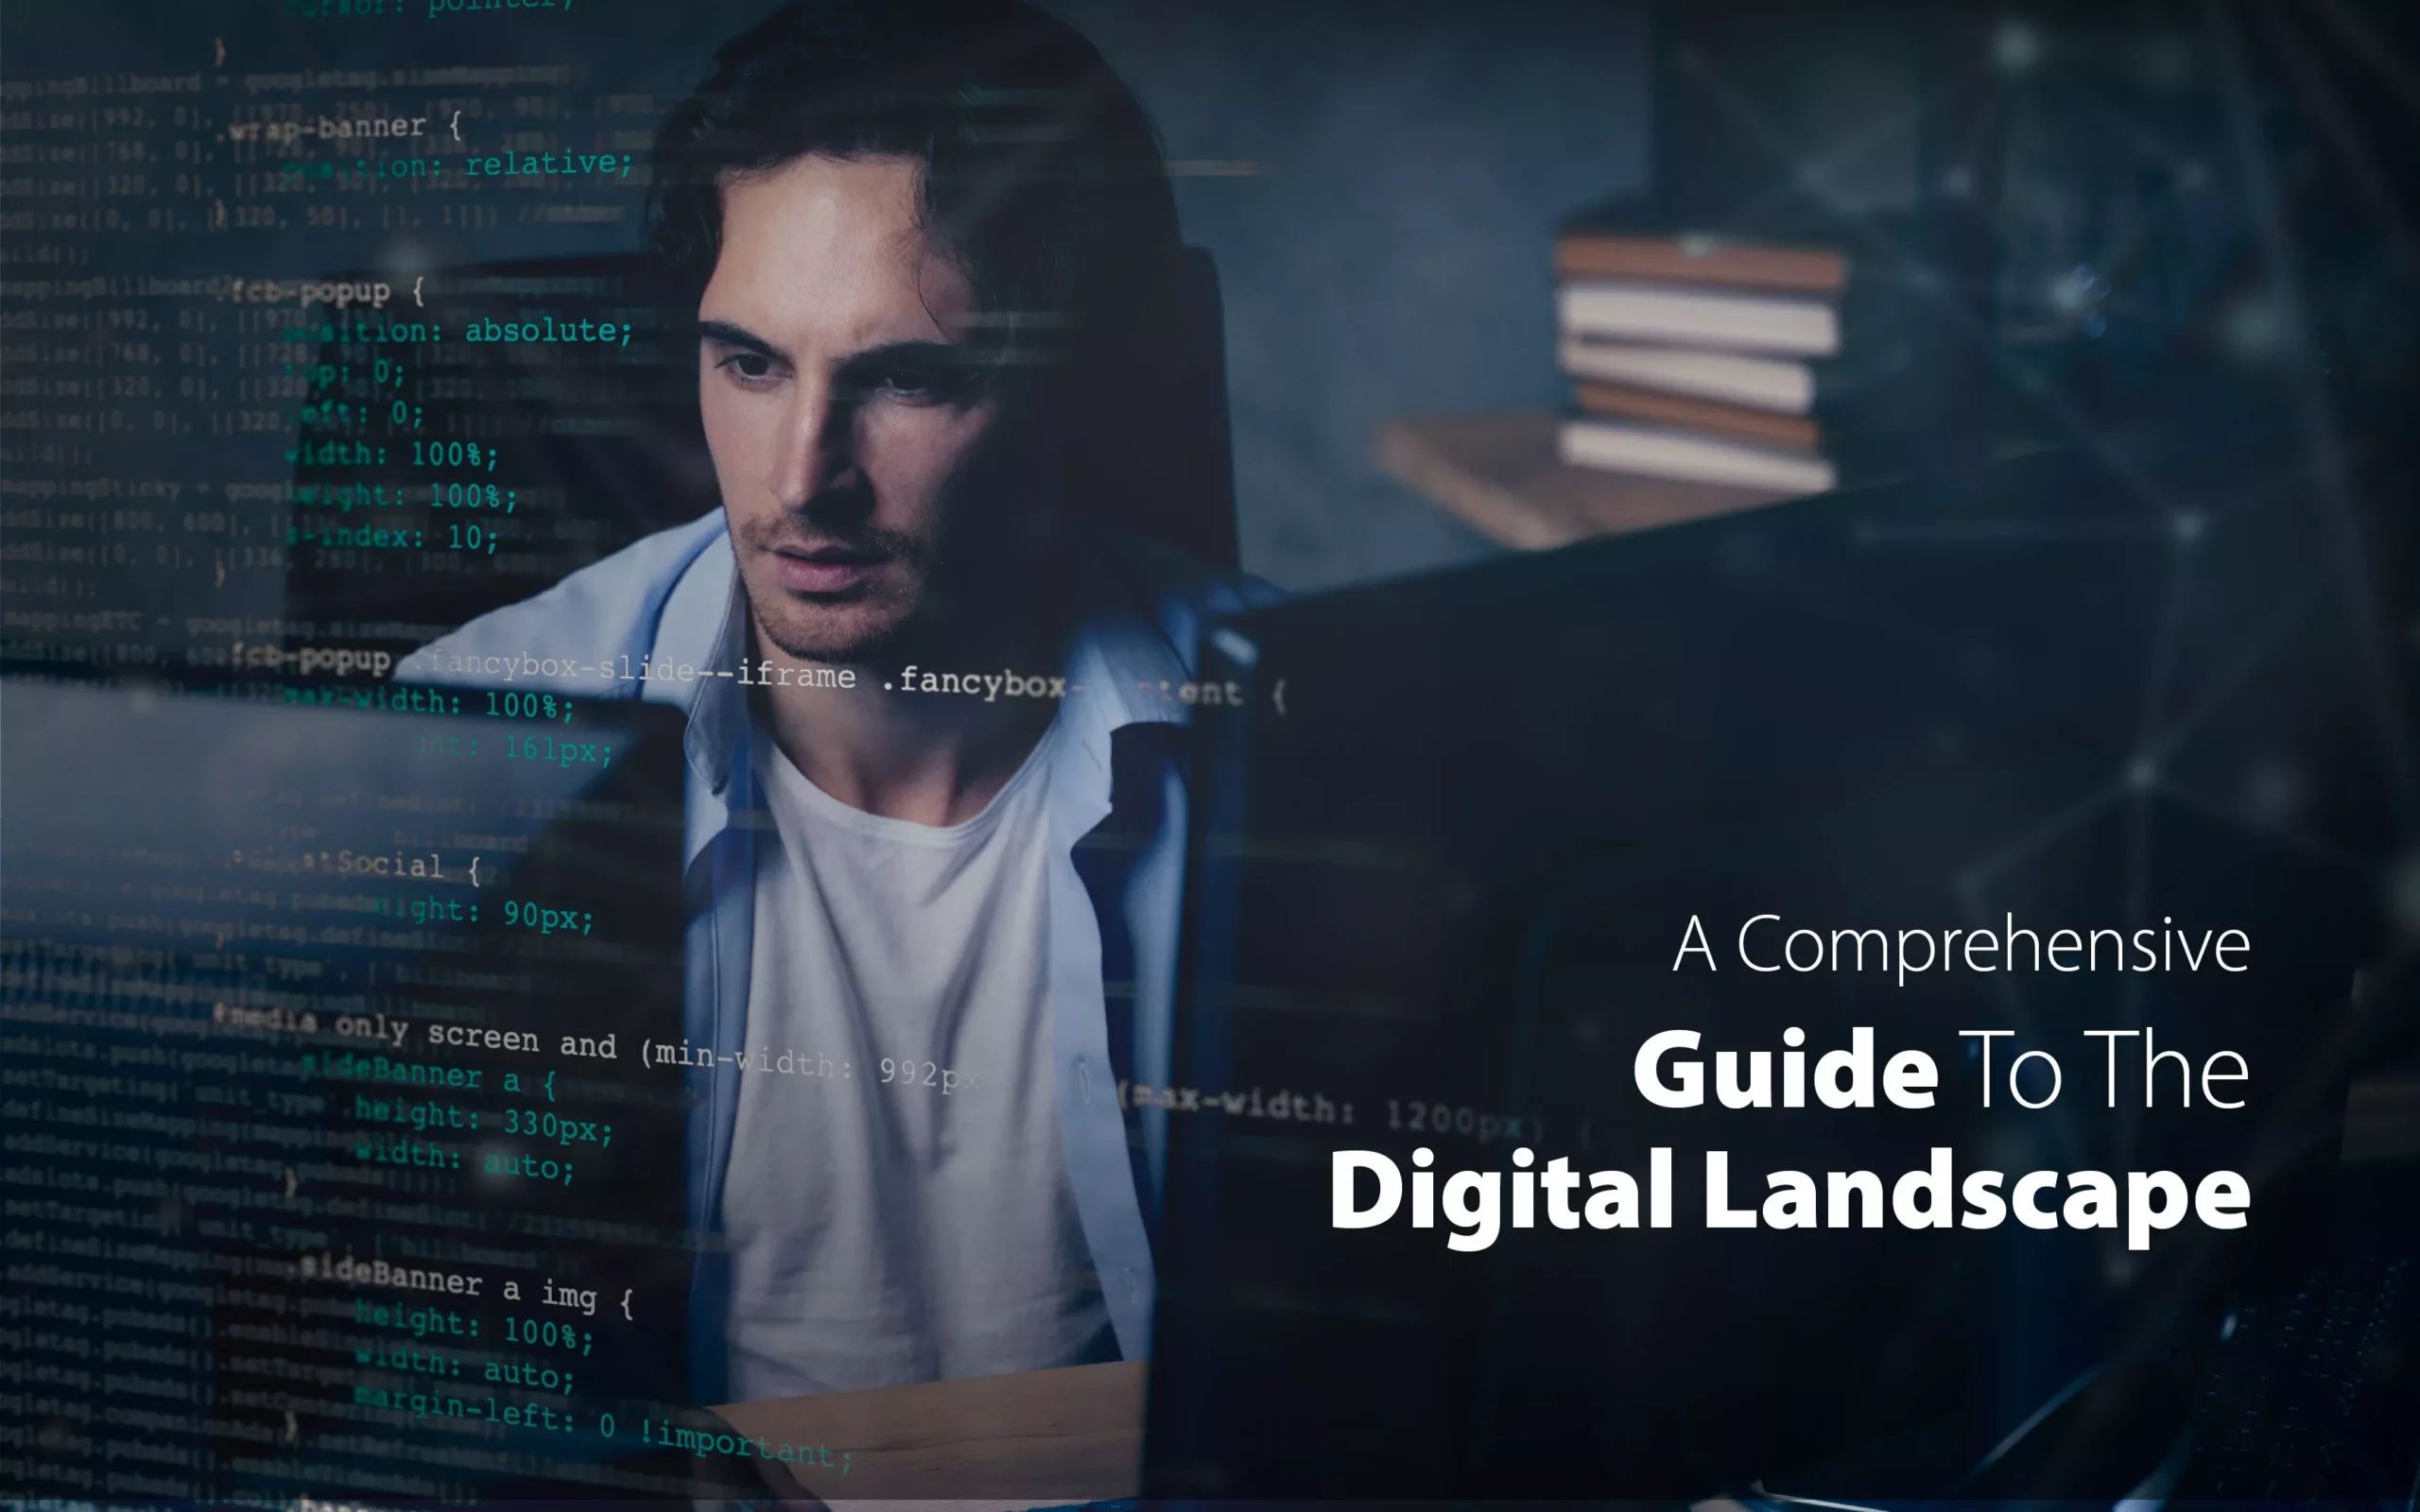 A Comprehensive Guide to the Digital Landscape